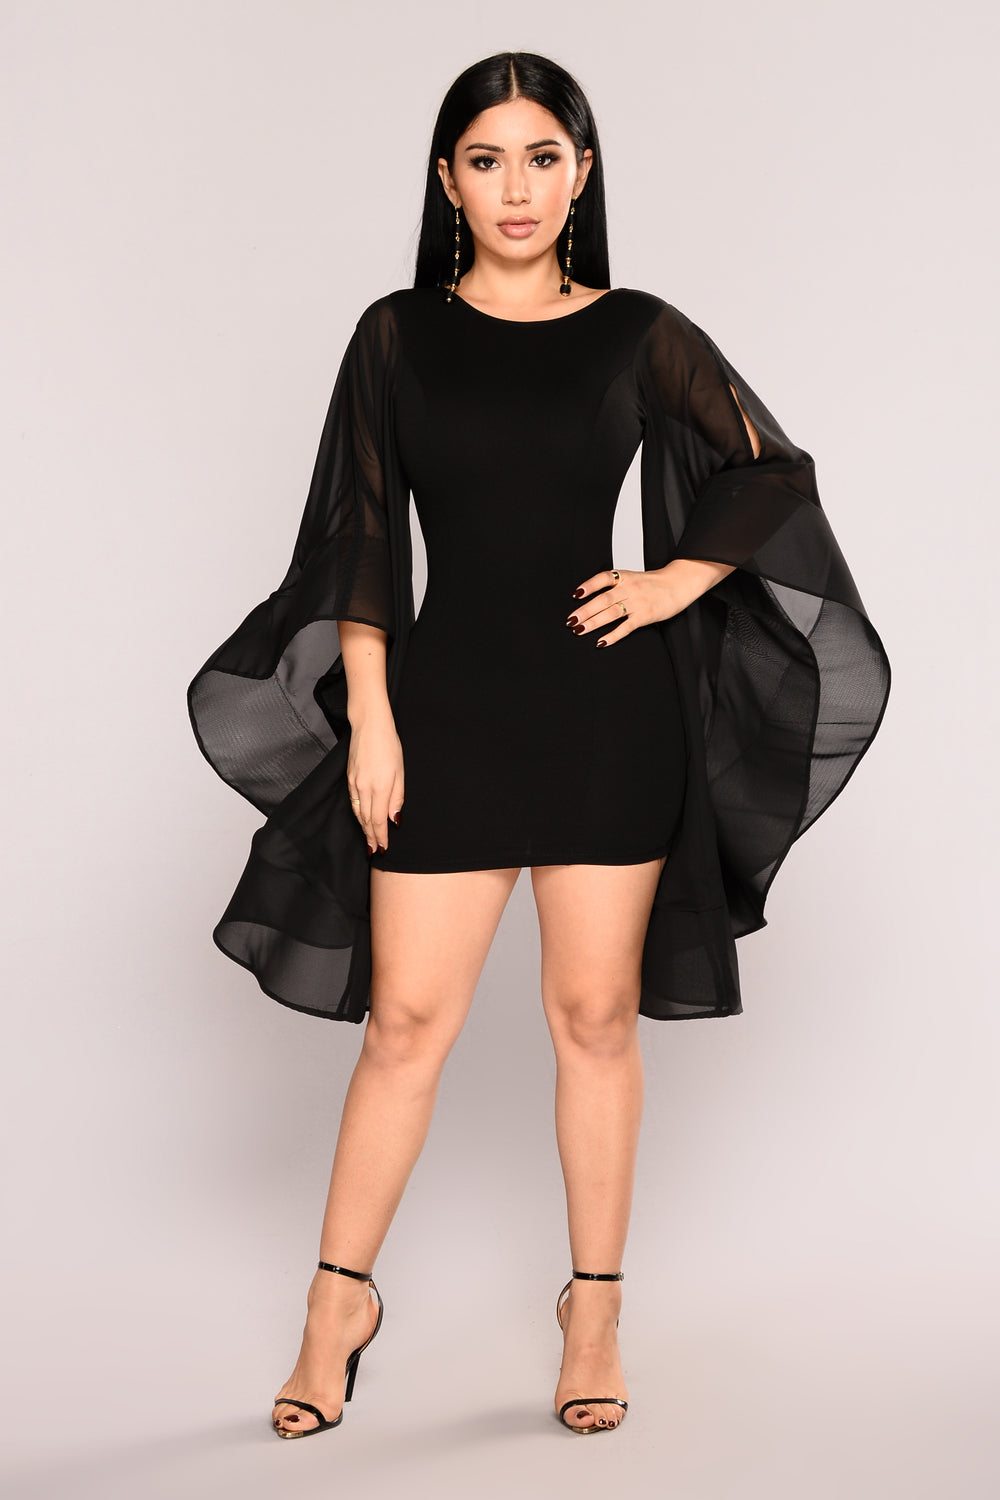 fashion nova black formal dresses